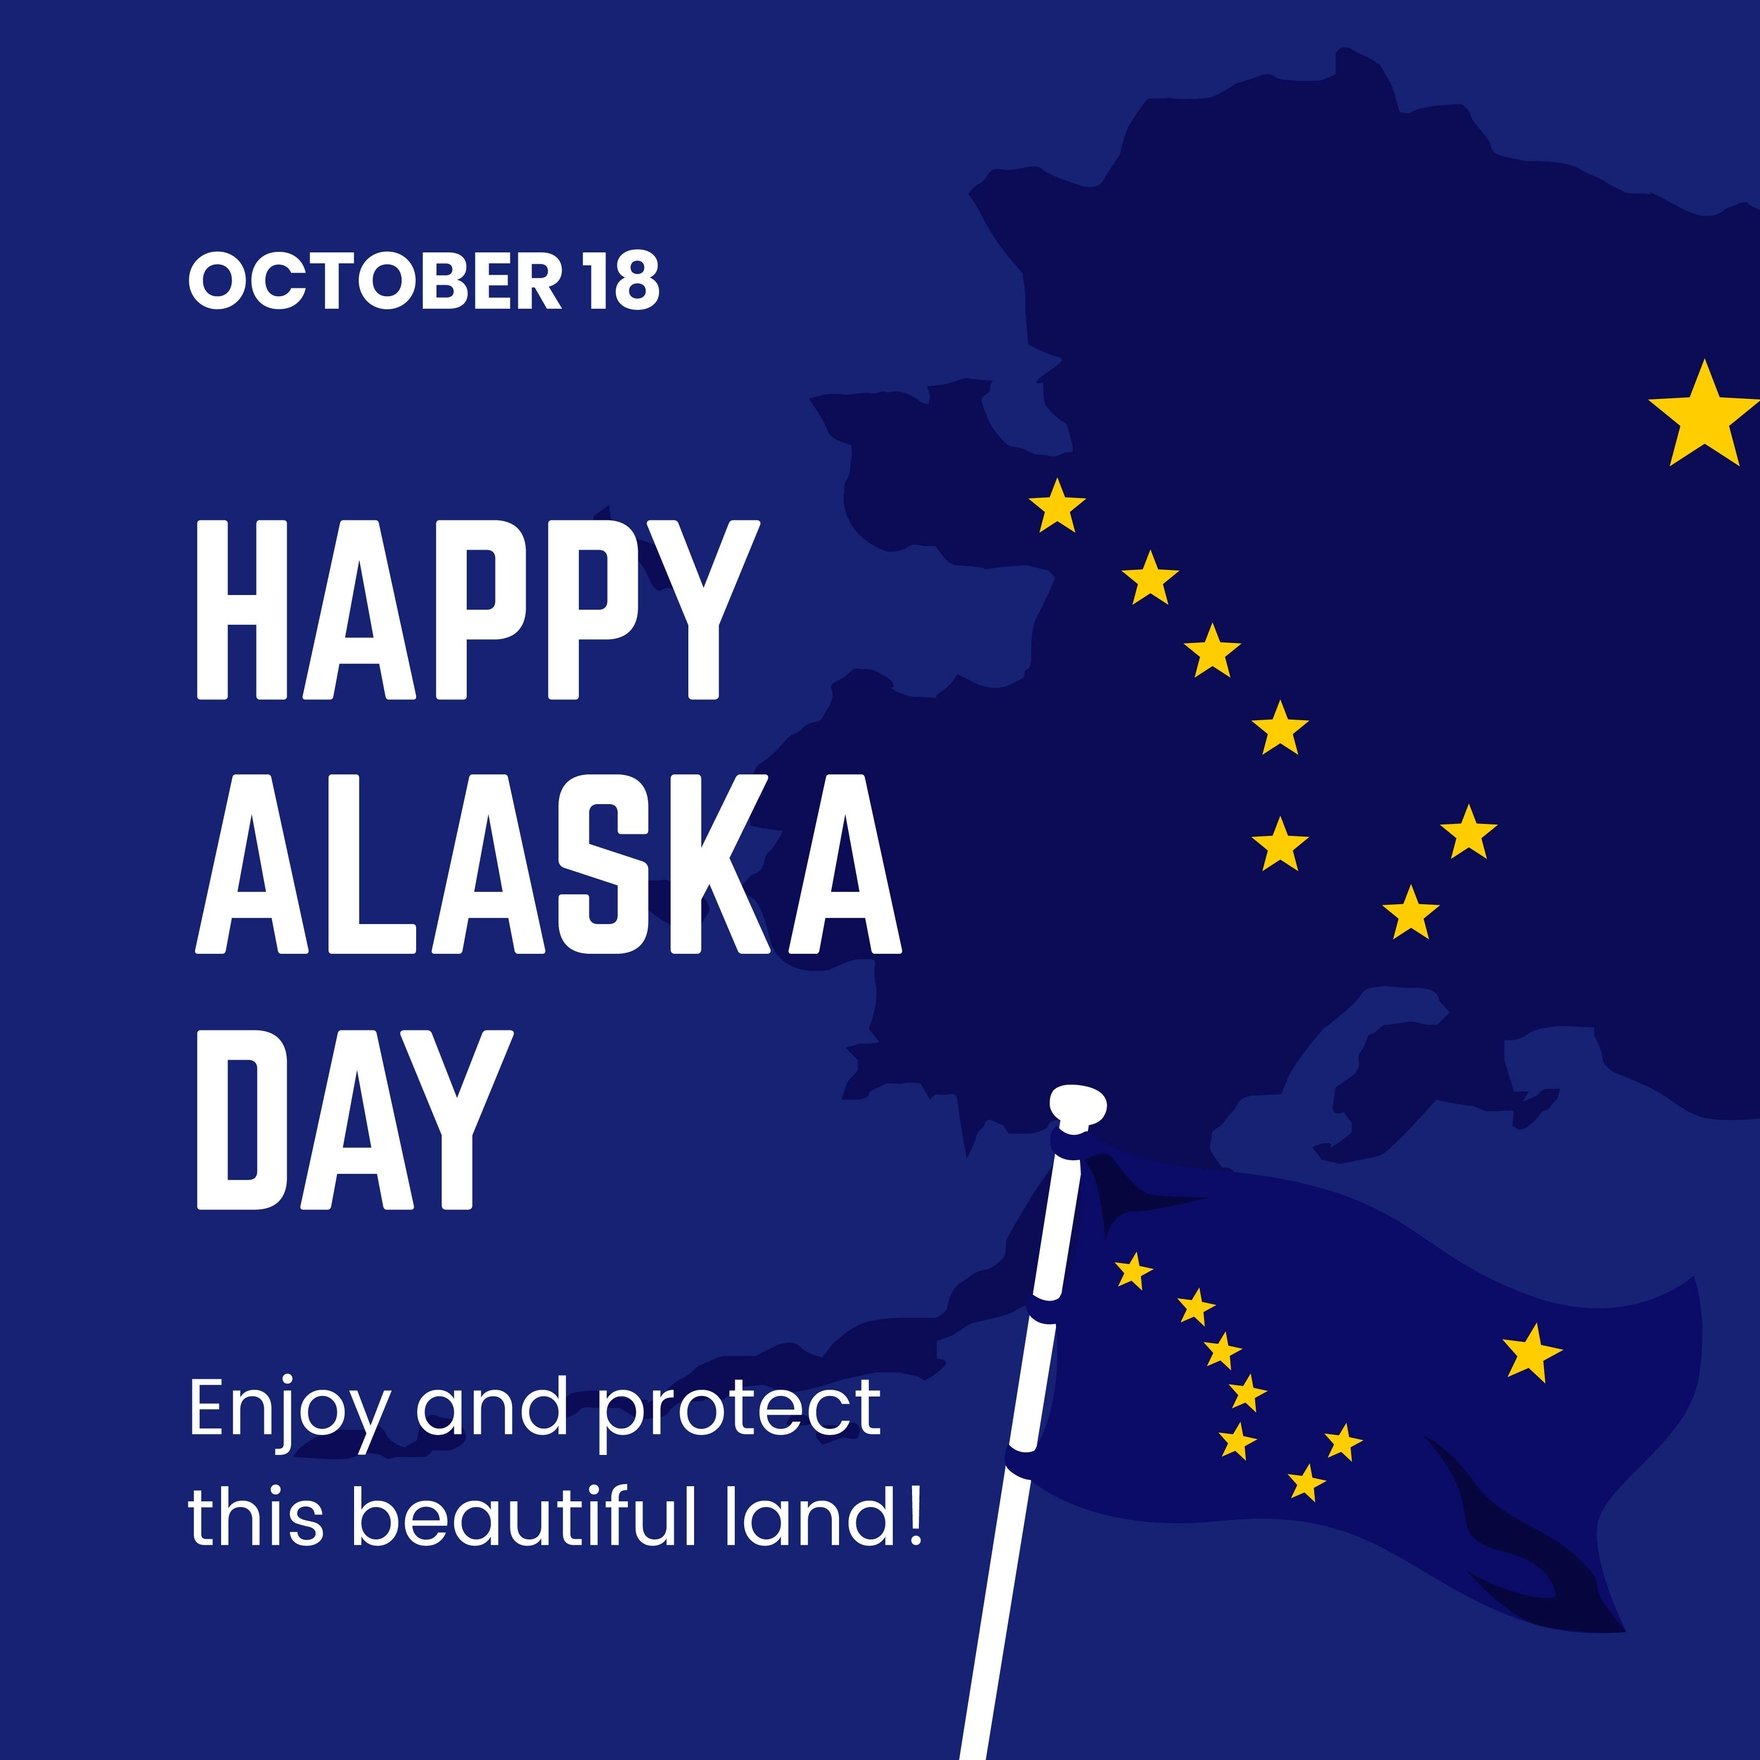 Free Alaska Day Instagram Post in Illustrator, PSD, EPS, SVG, JPG, PNG